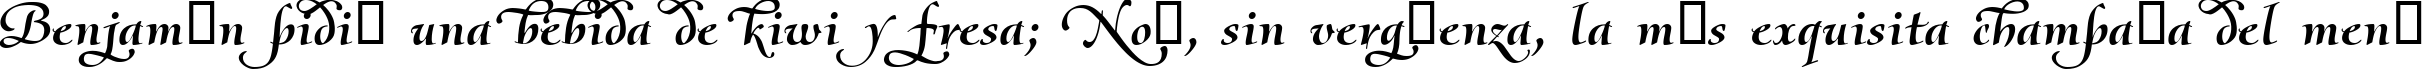 Пример написания шрифтом Olietta script Lyrica BoldItalic текста на испанском